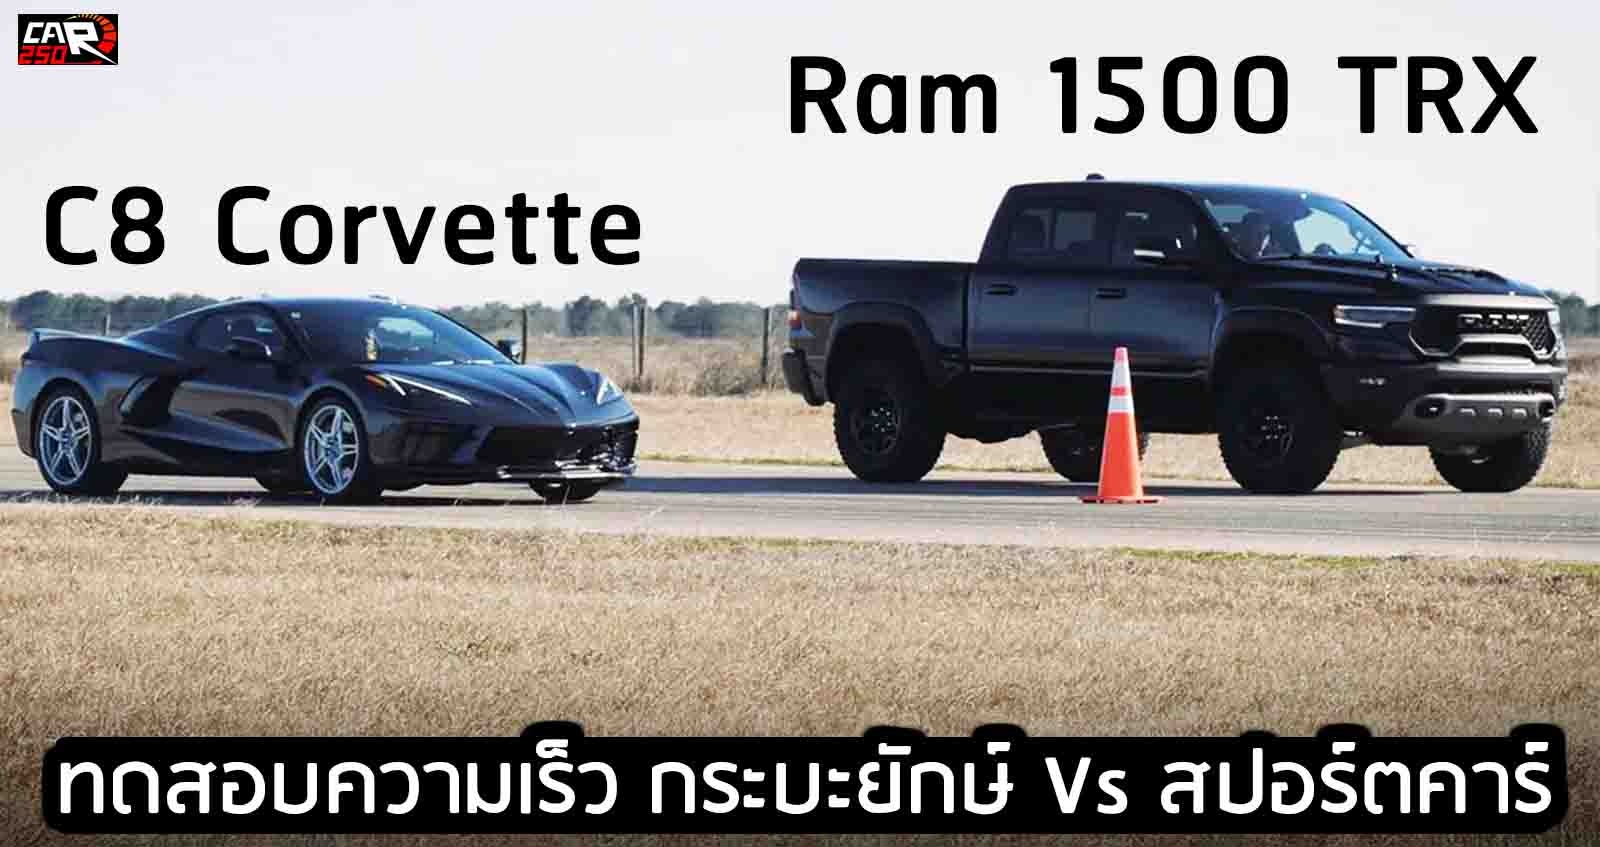 Ram 1500 TRX Vs Chevrolet C8 Corvette ทดสอบความเร็วระยะสั้น Drag Race